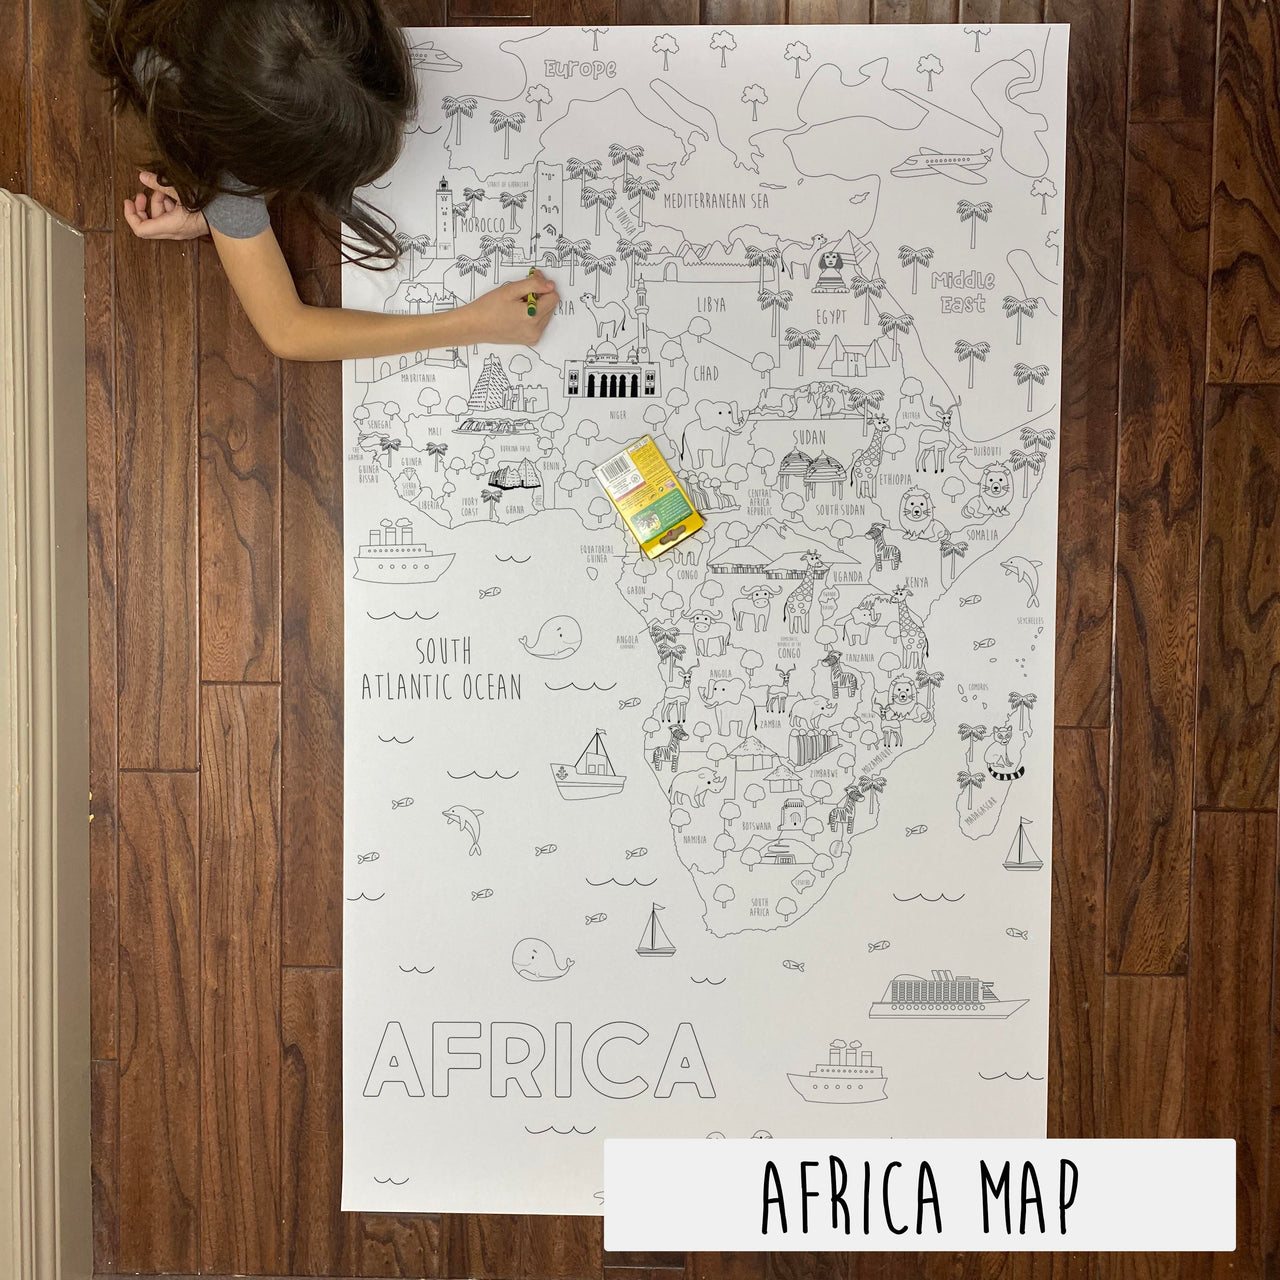 Africa Map Coloring Sheet